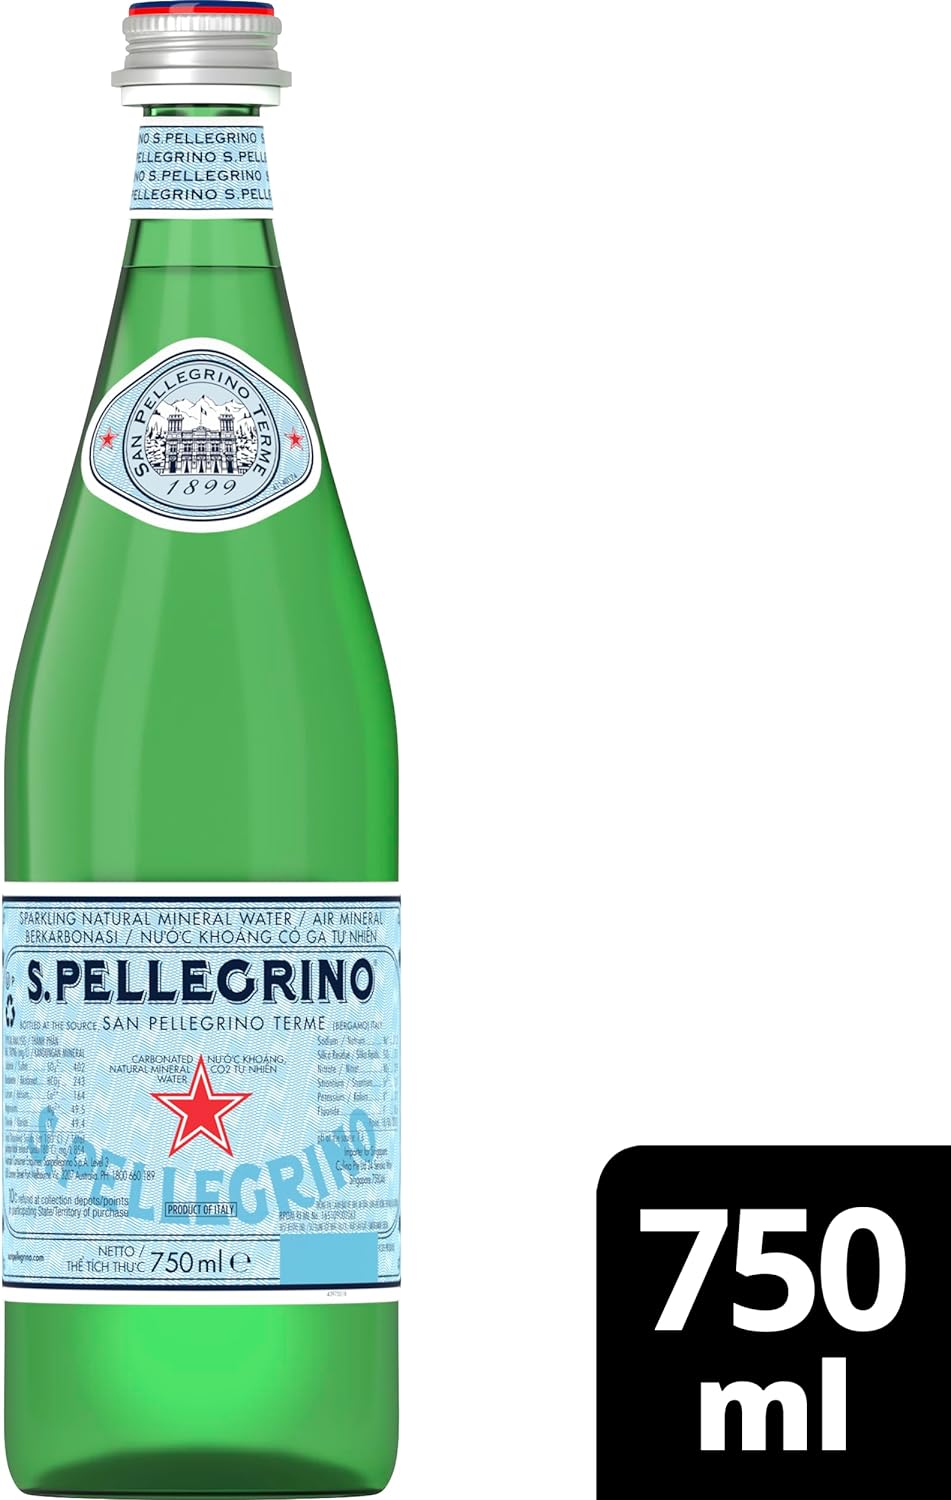 San Pellegrino sparkling Italian water glass bottles 12x75cl